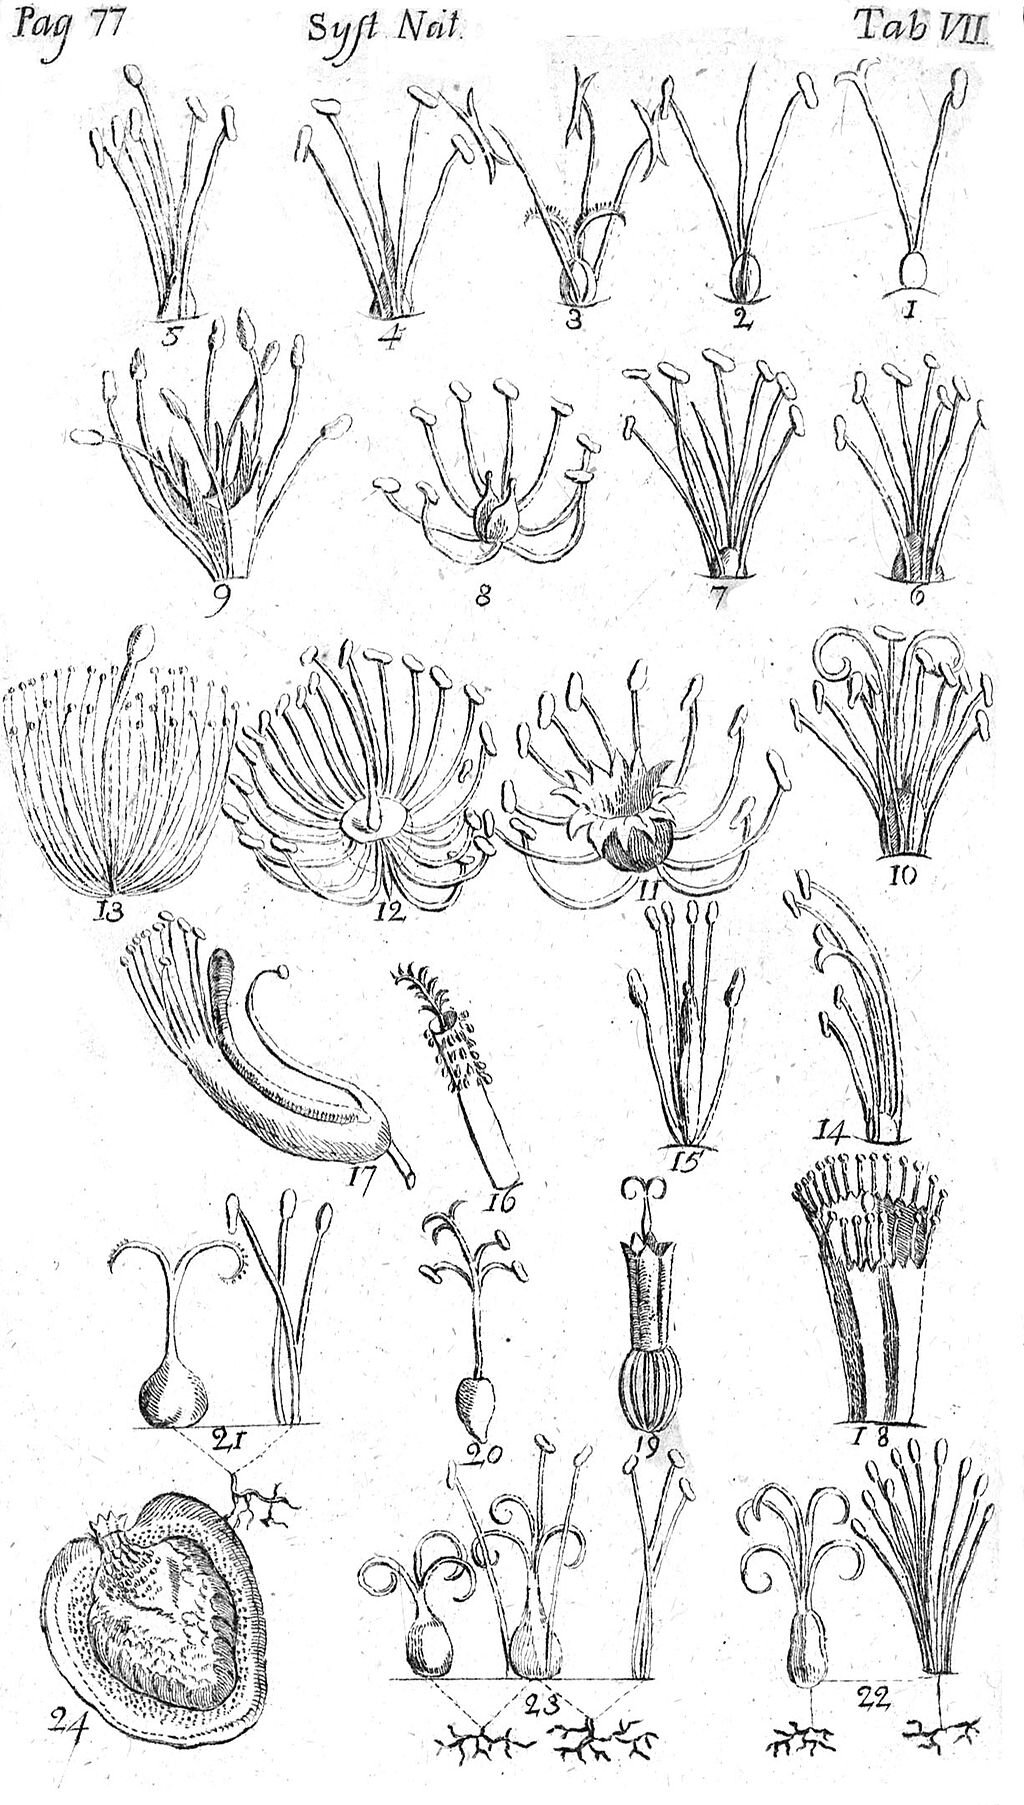 {{PD-US-expired |Systema Naturae, 6th edition, Plate VII: Plantarum classes secundum stamina., Carl von Linné, 1748}}